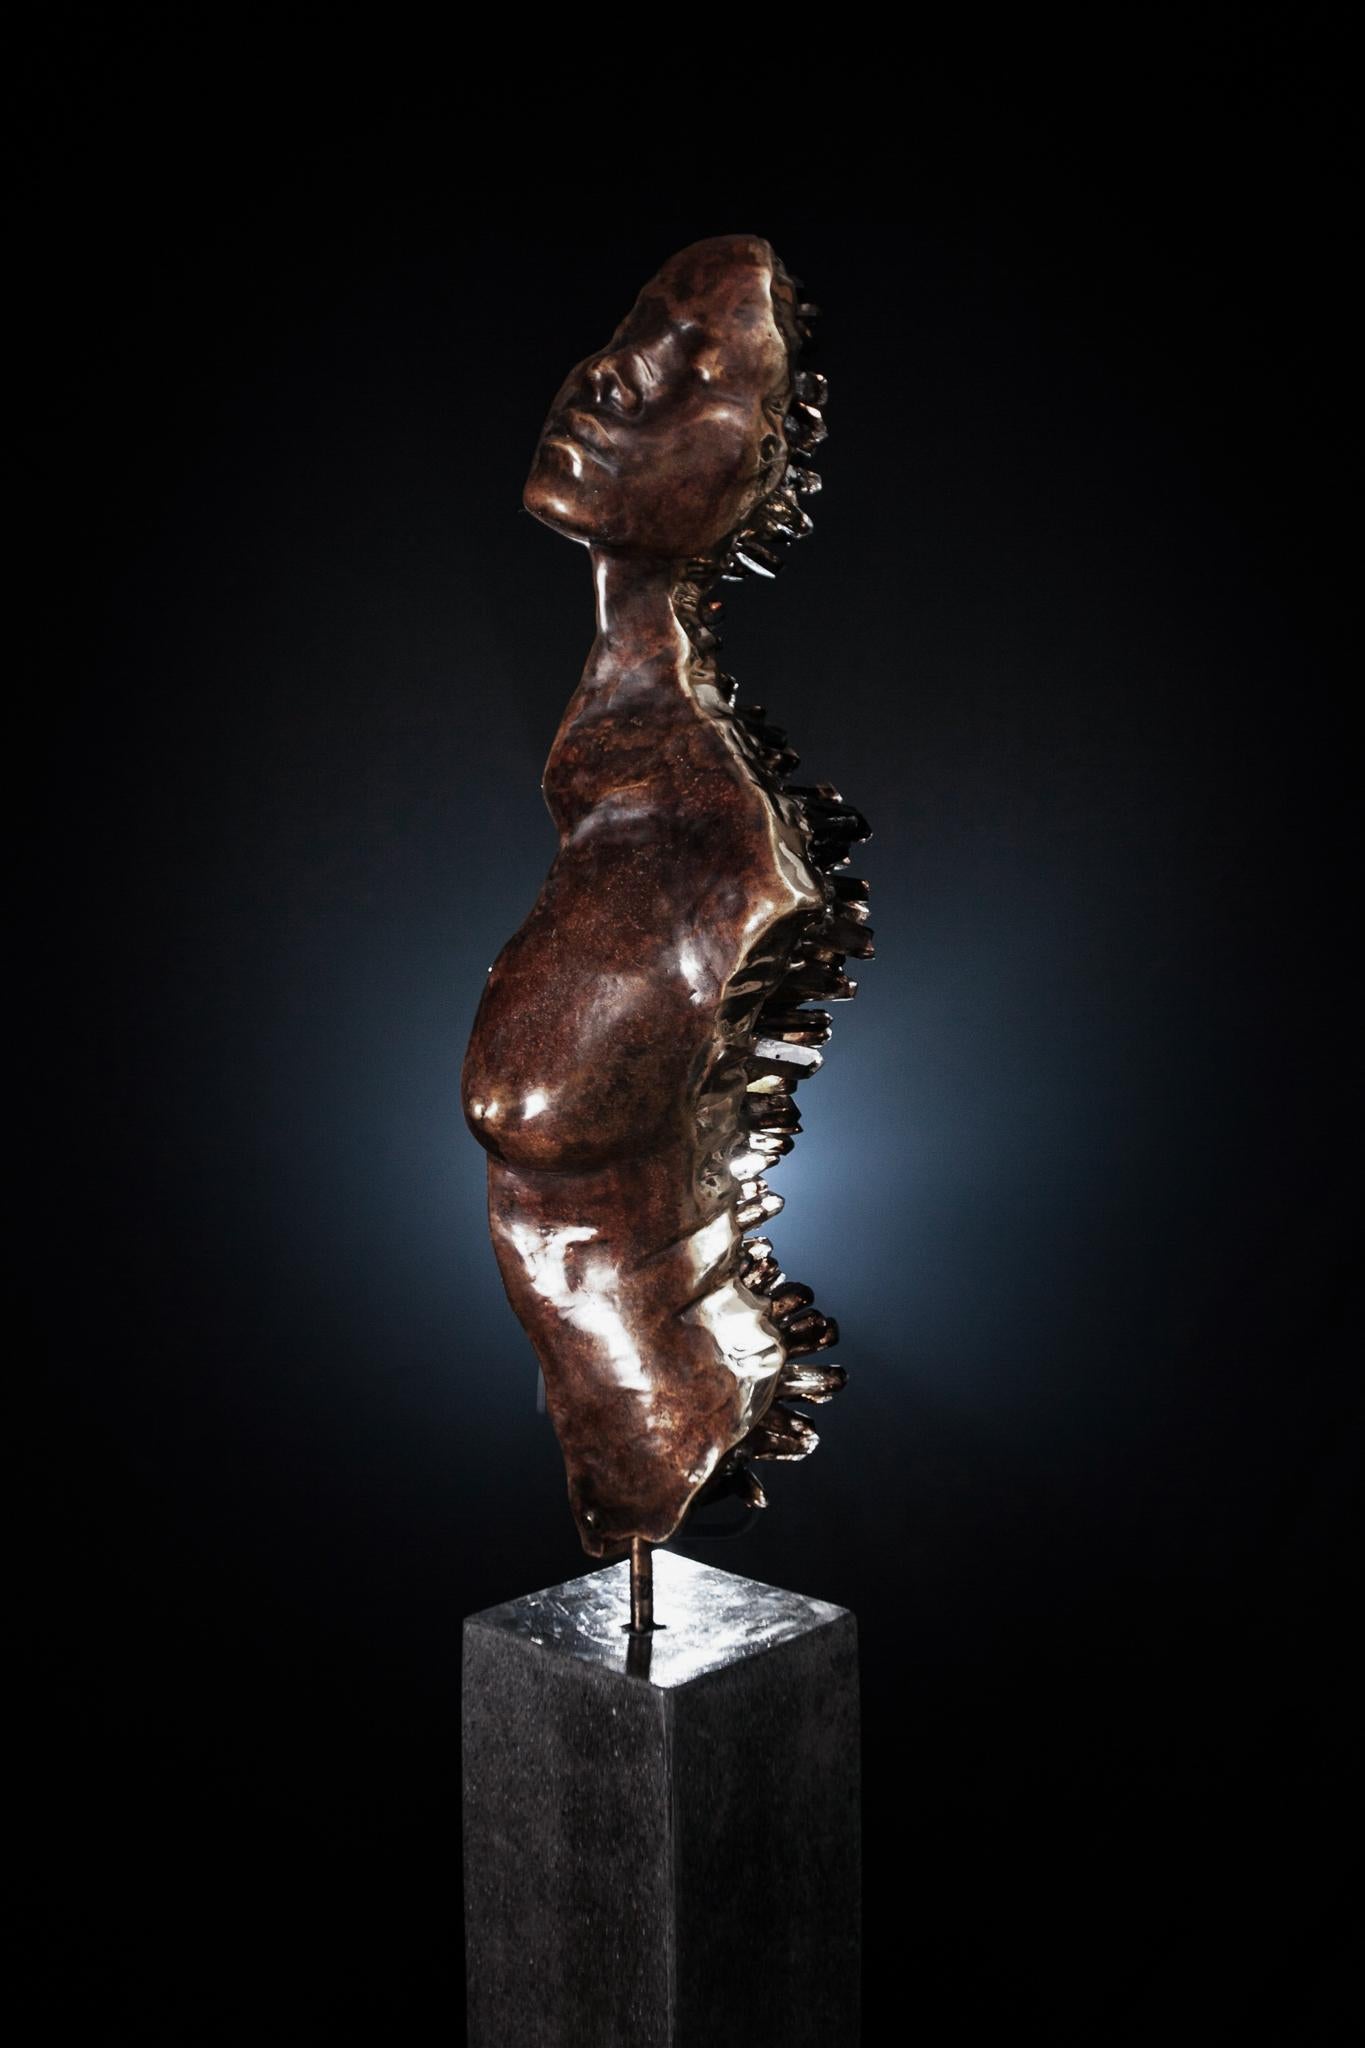 James Lomax Abstract Sculpture - LIMINAL STATE  Smokey quartz crystals, bronze sculpture